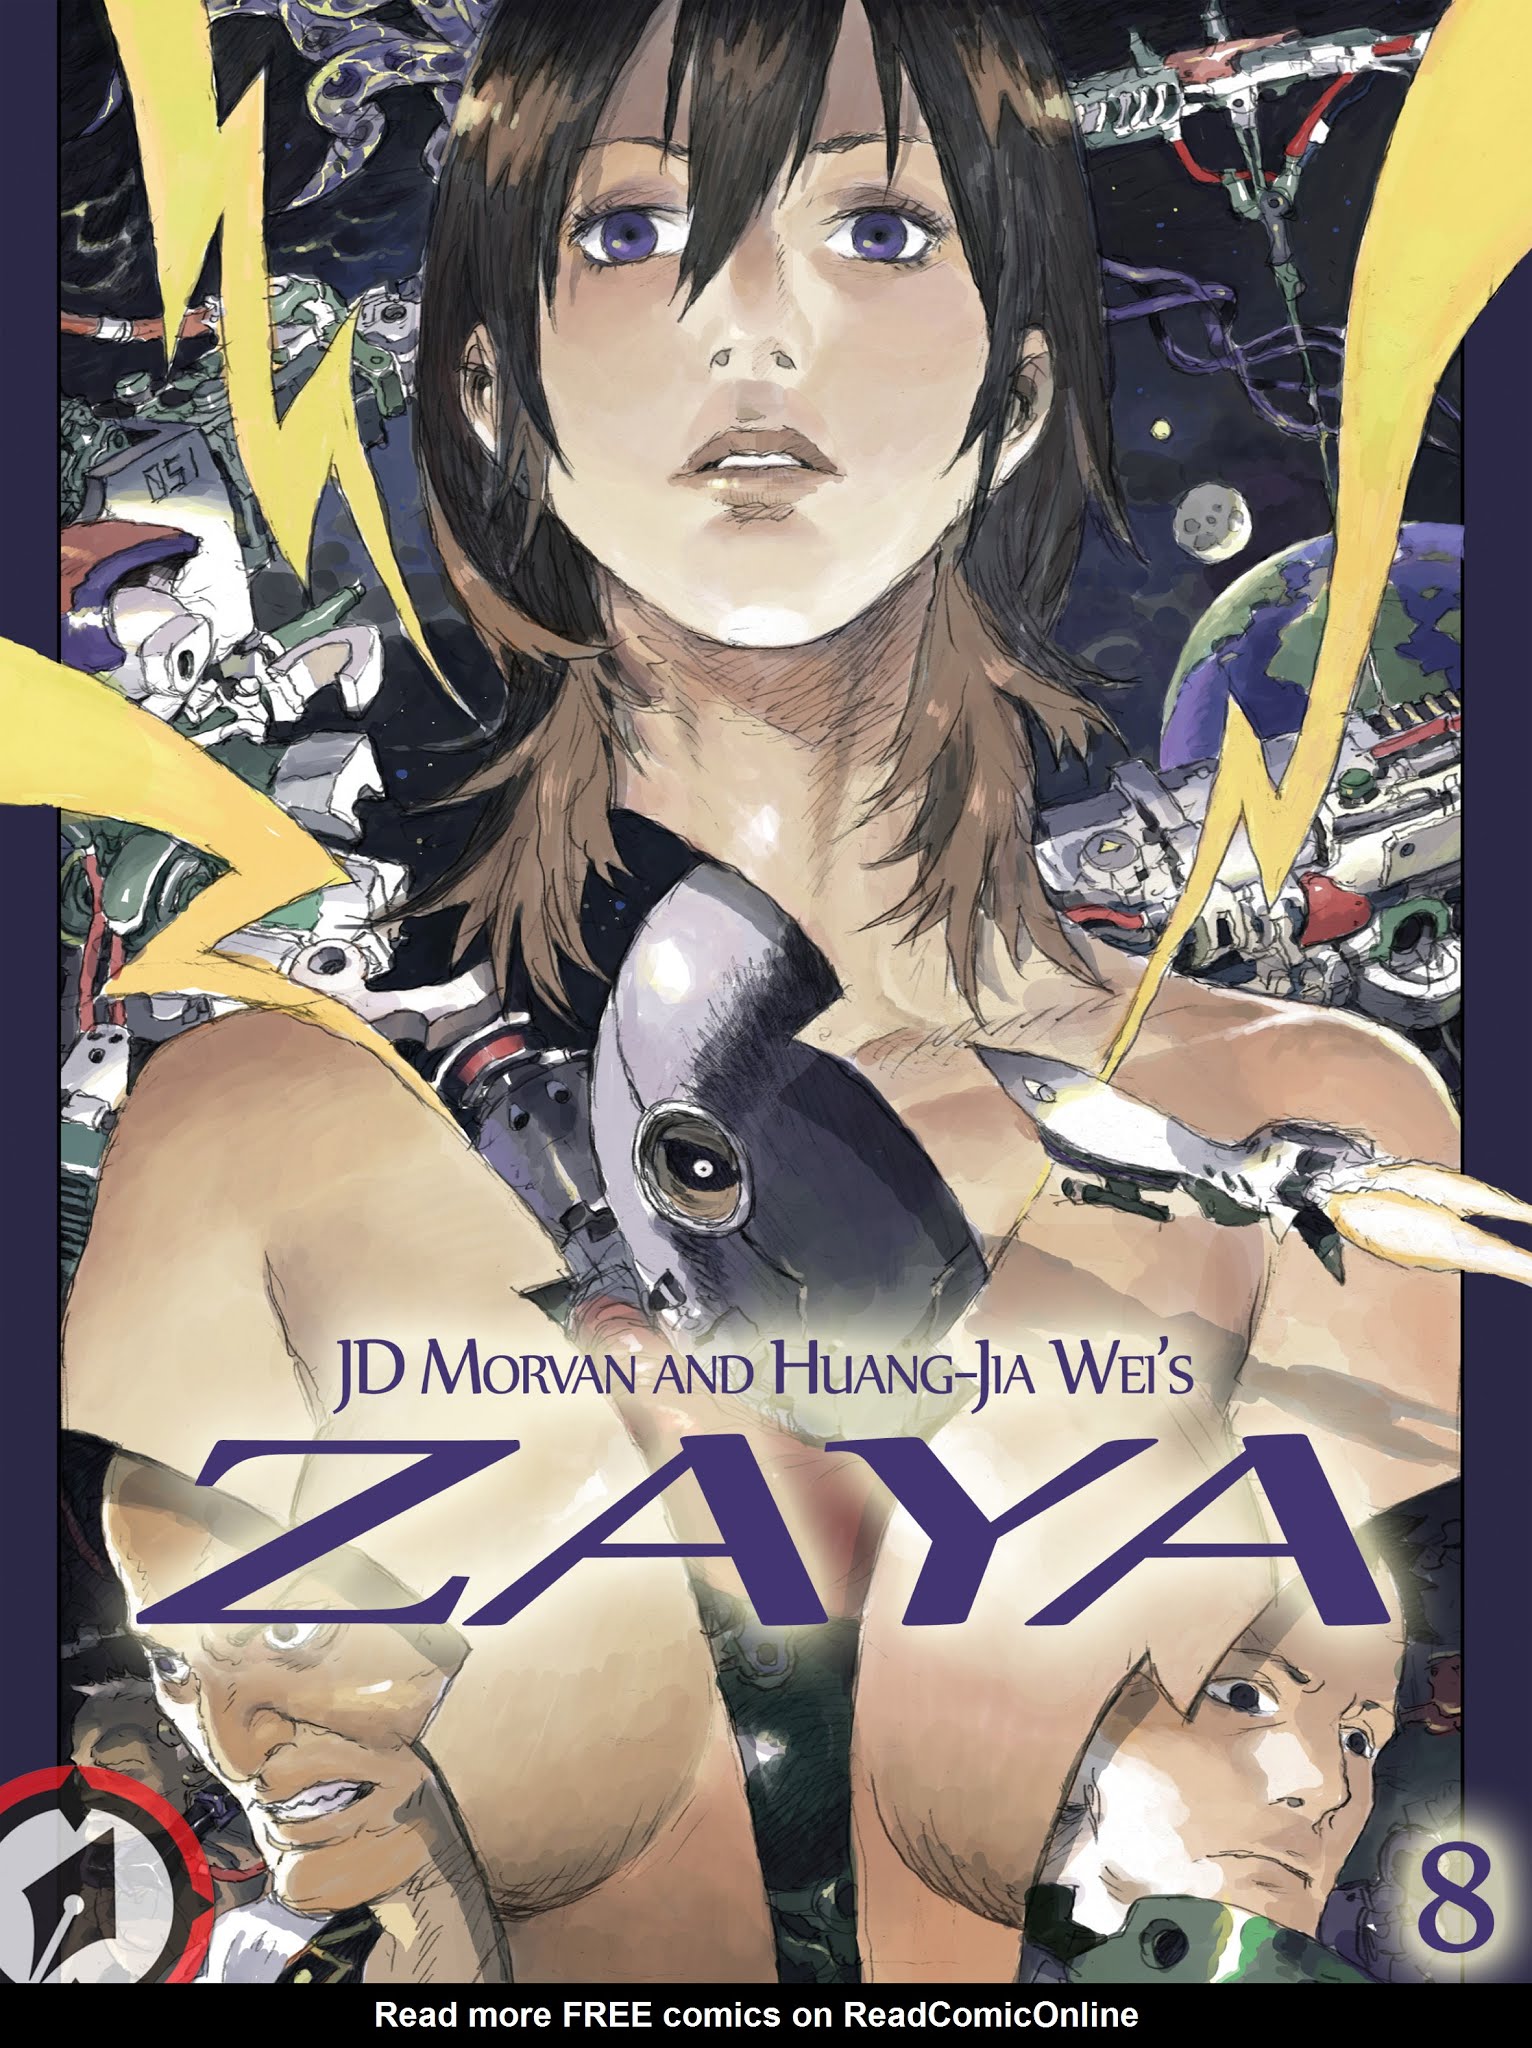 Read online Zaya comic -  Issue #8 - 1